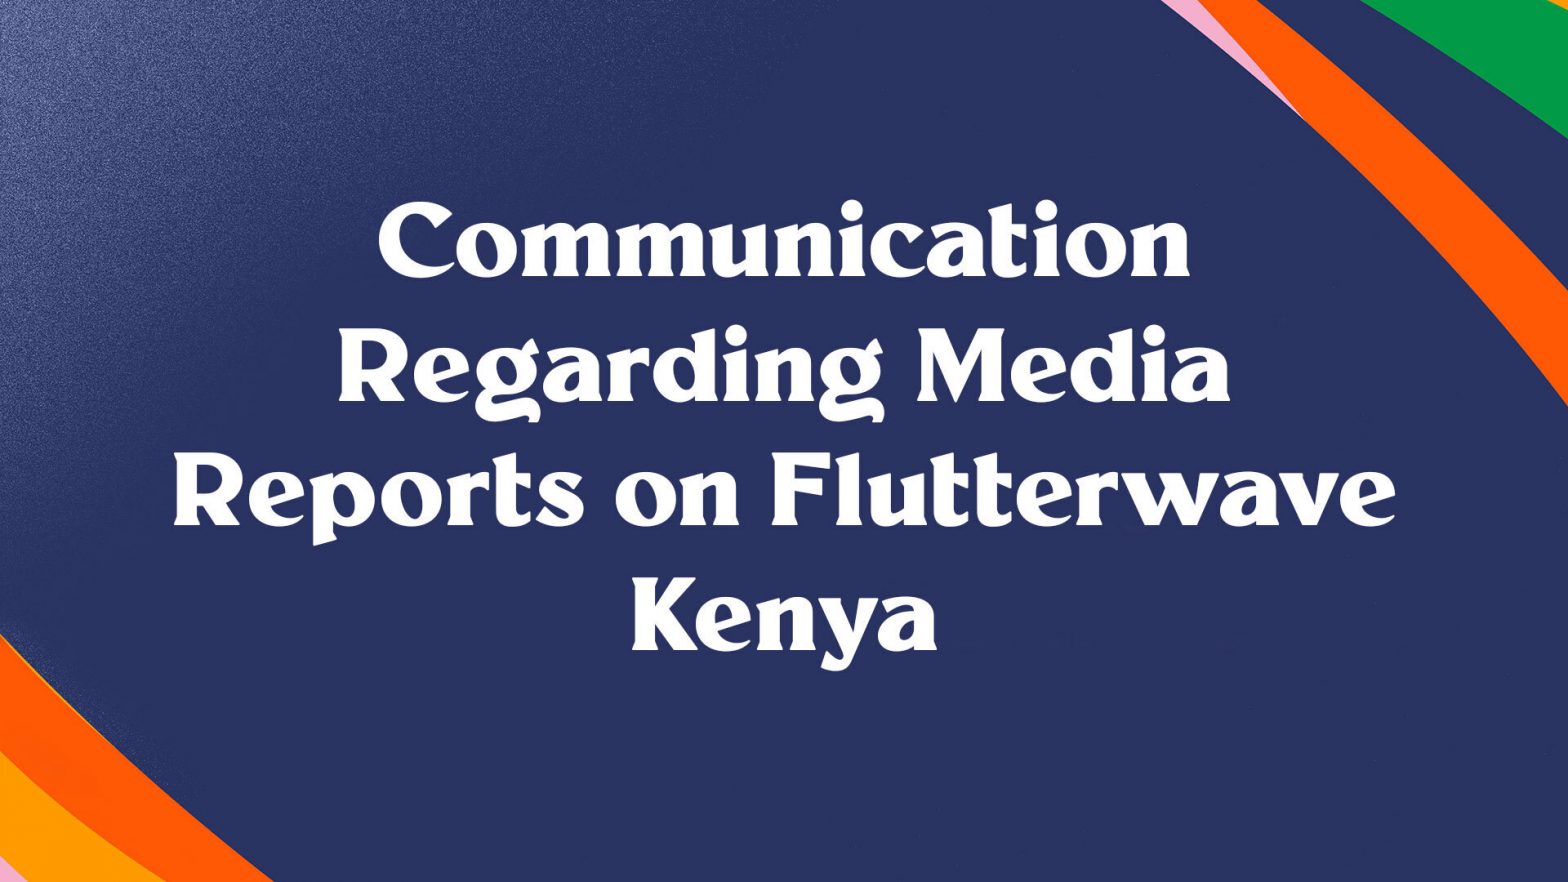 Regarding Media Reports On Flutterwave kenya